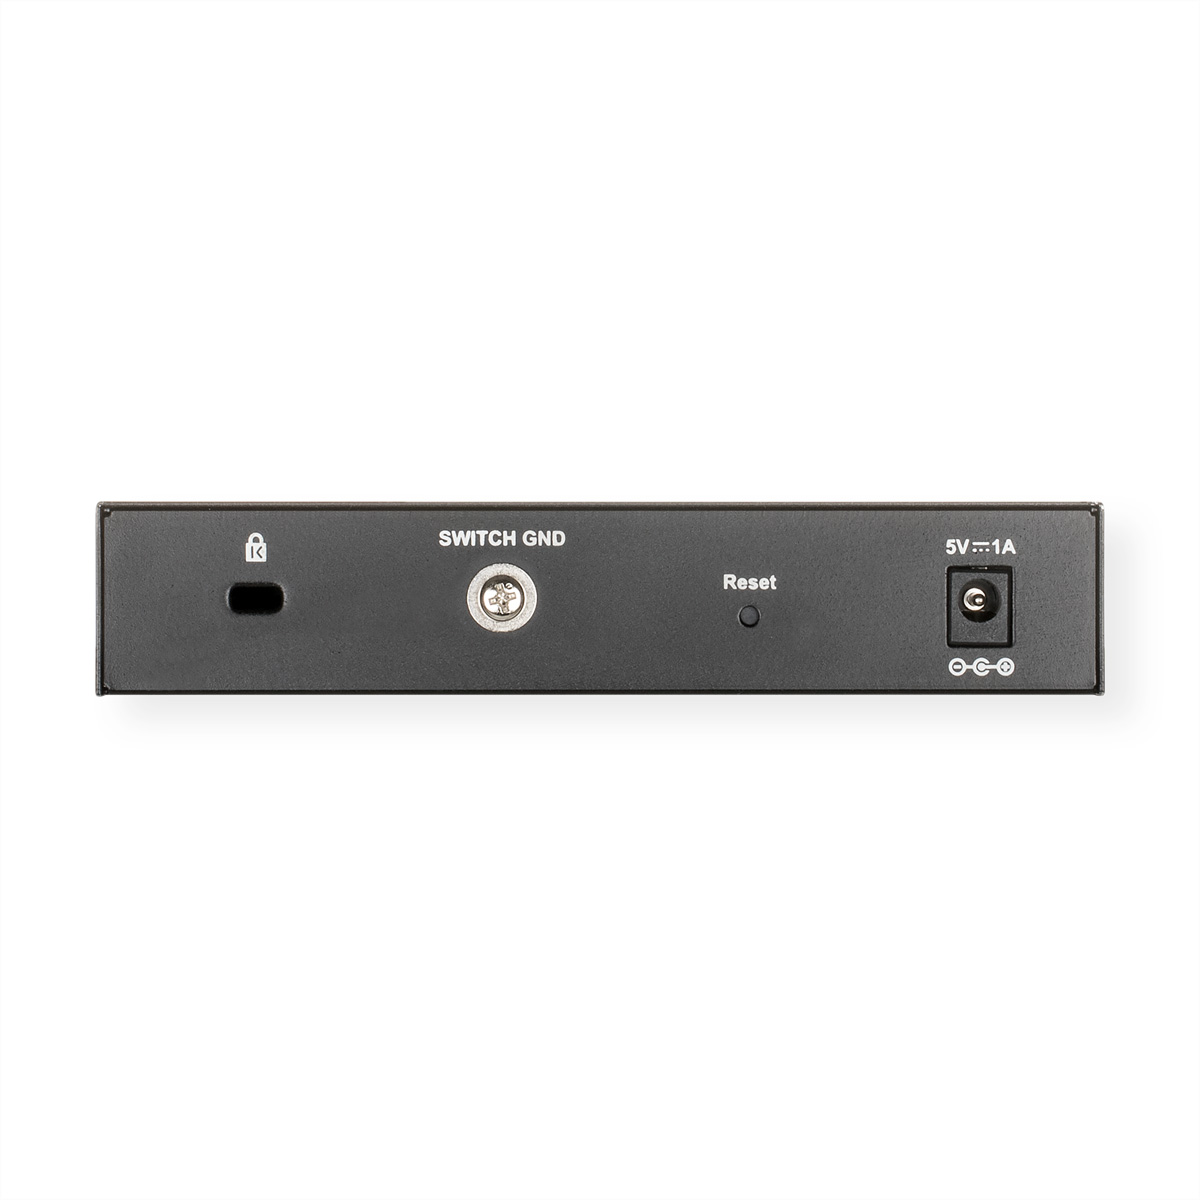 D-LINK DGS-1100-08V2/E Gigabit Smart Switch Switch Gigabit Managed Ethernet